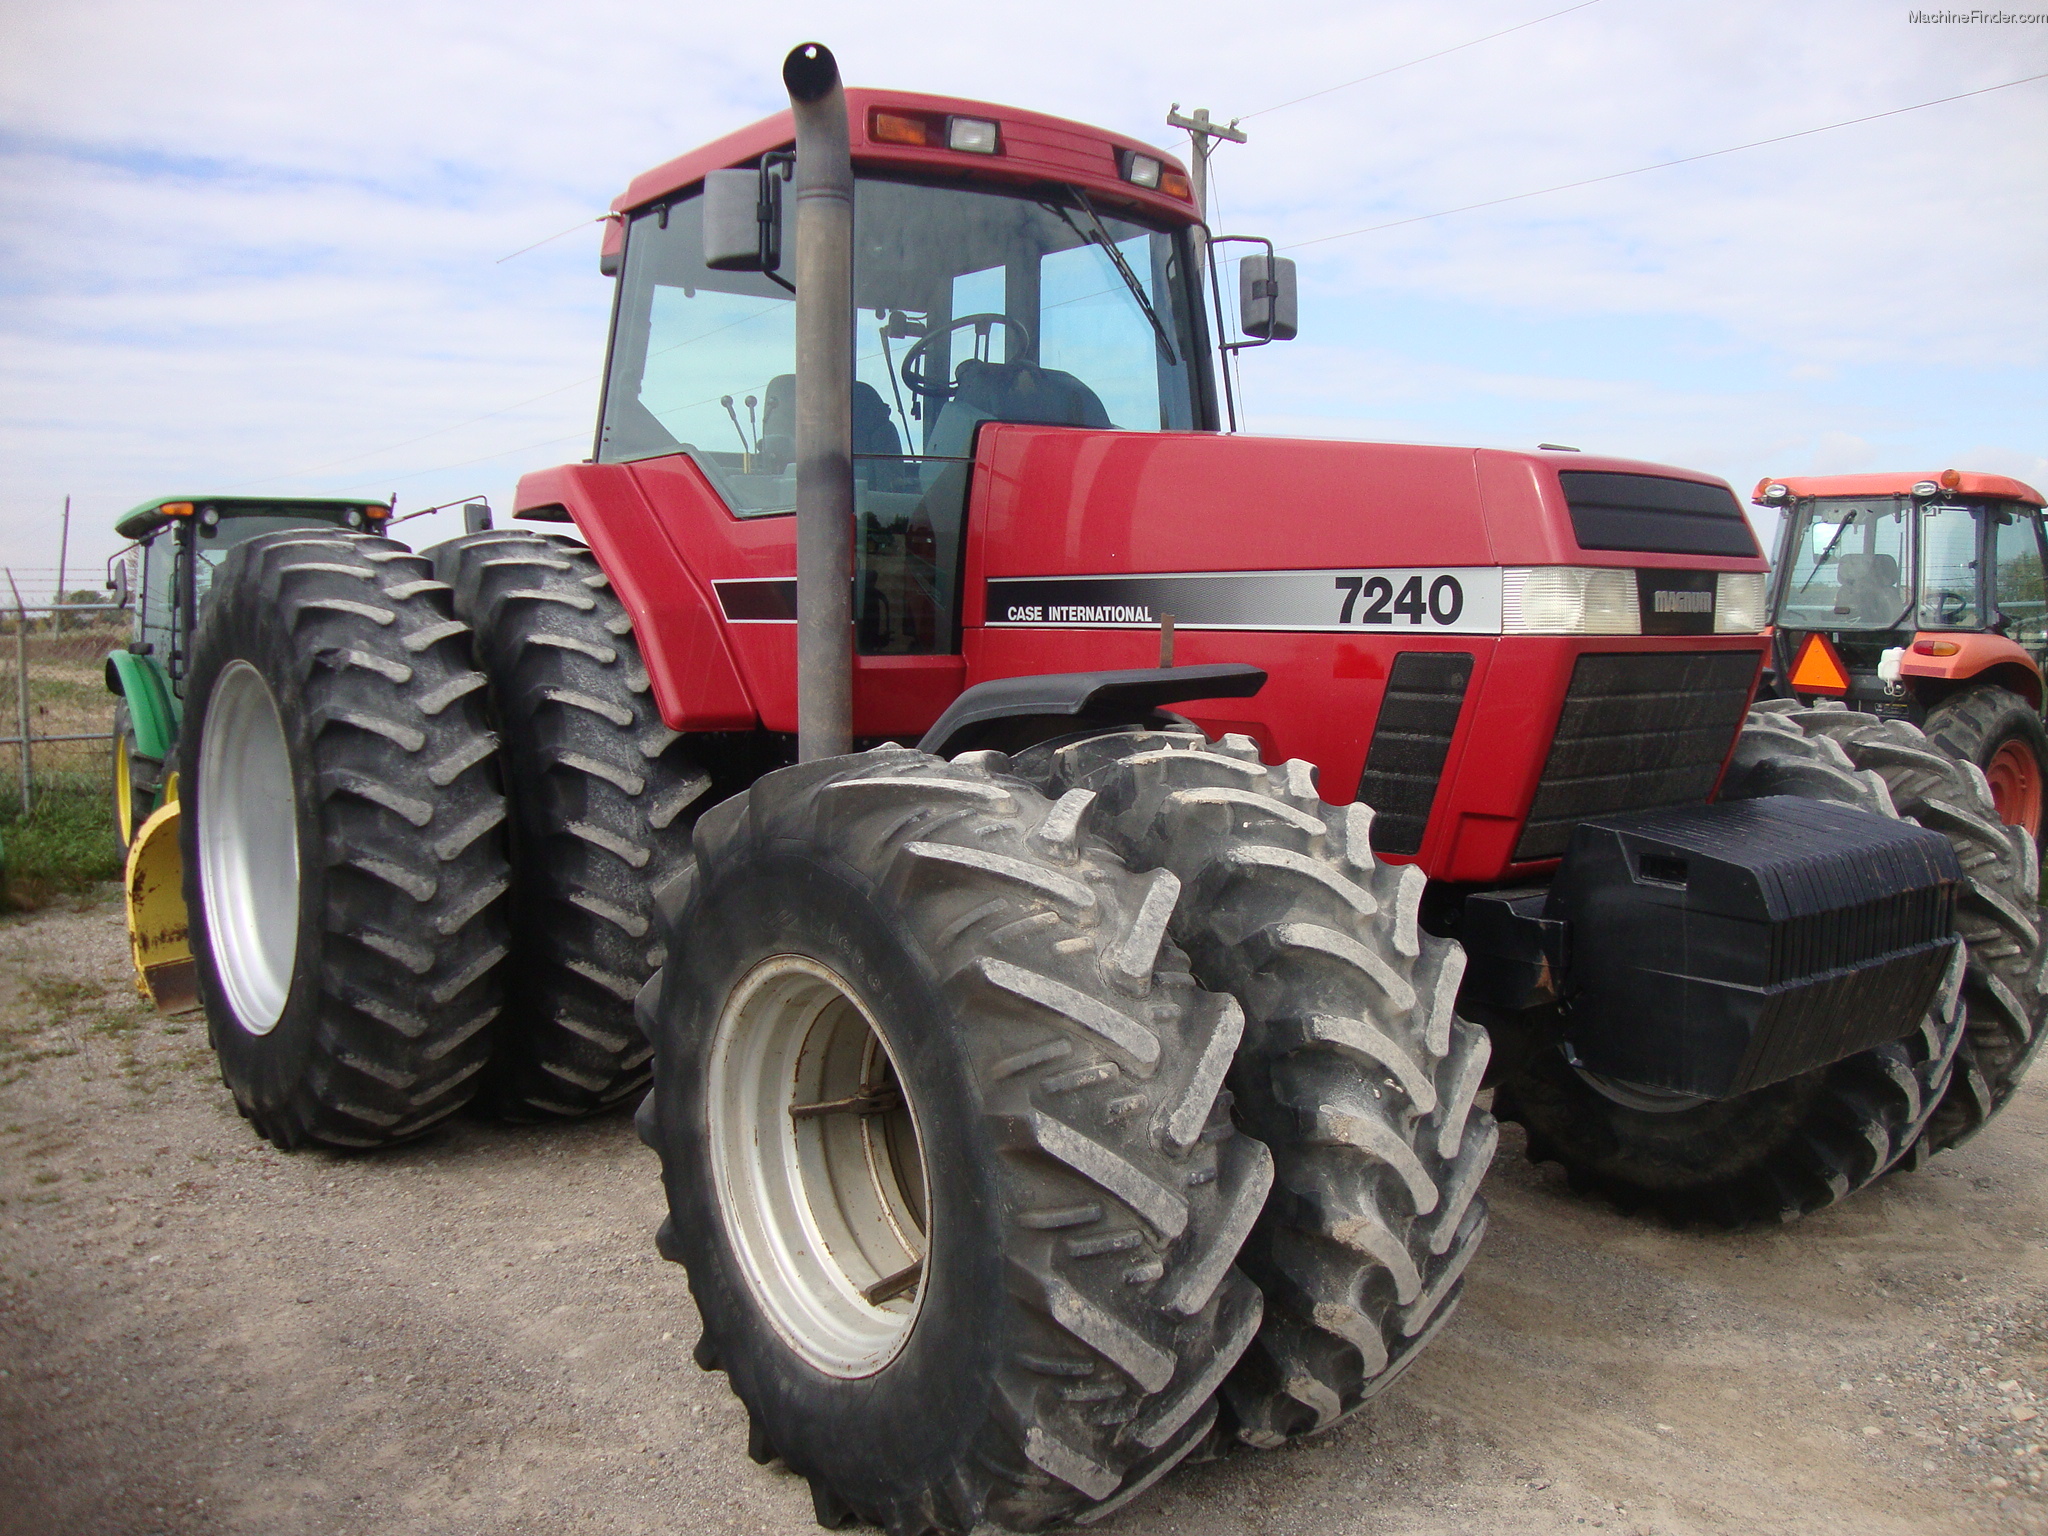 1994 Case IH 7240 Tractors - Row Crop (+100hp) - John ...